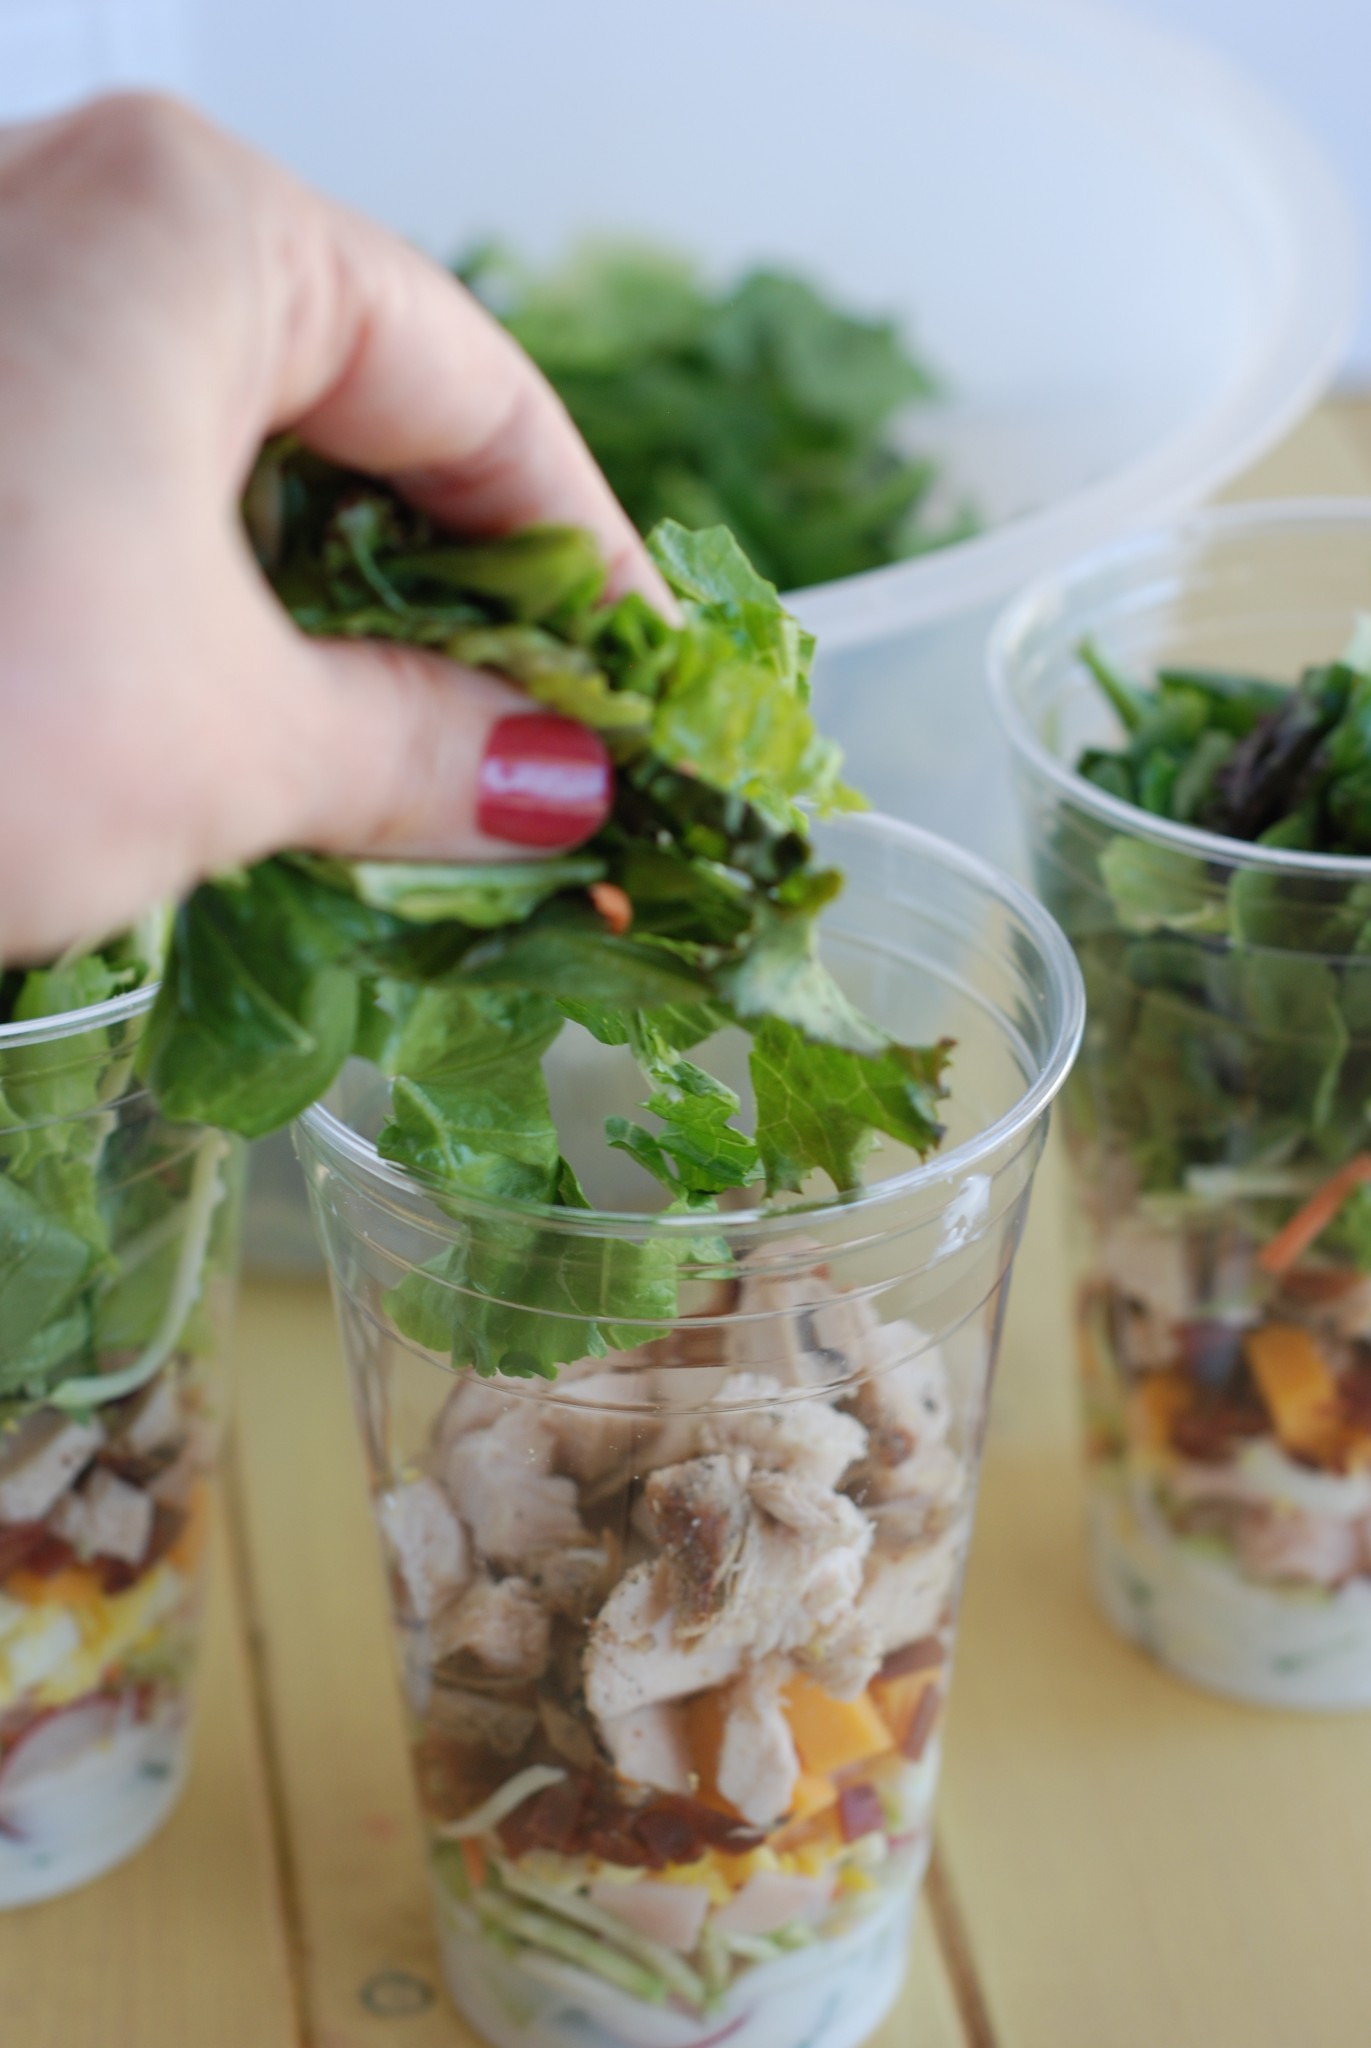 Salad Cups - the Portable Mason Jar Salad - Beneficial Bento